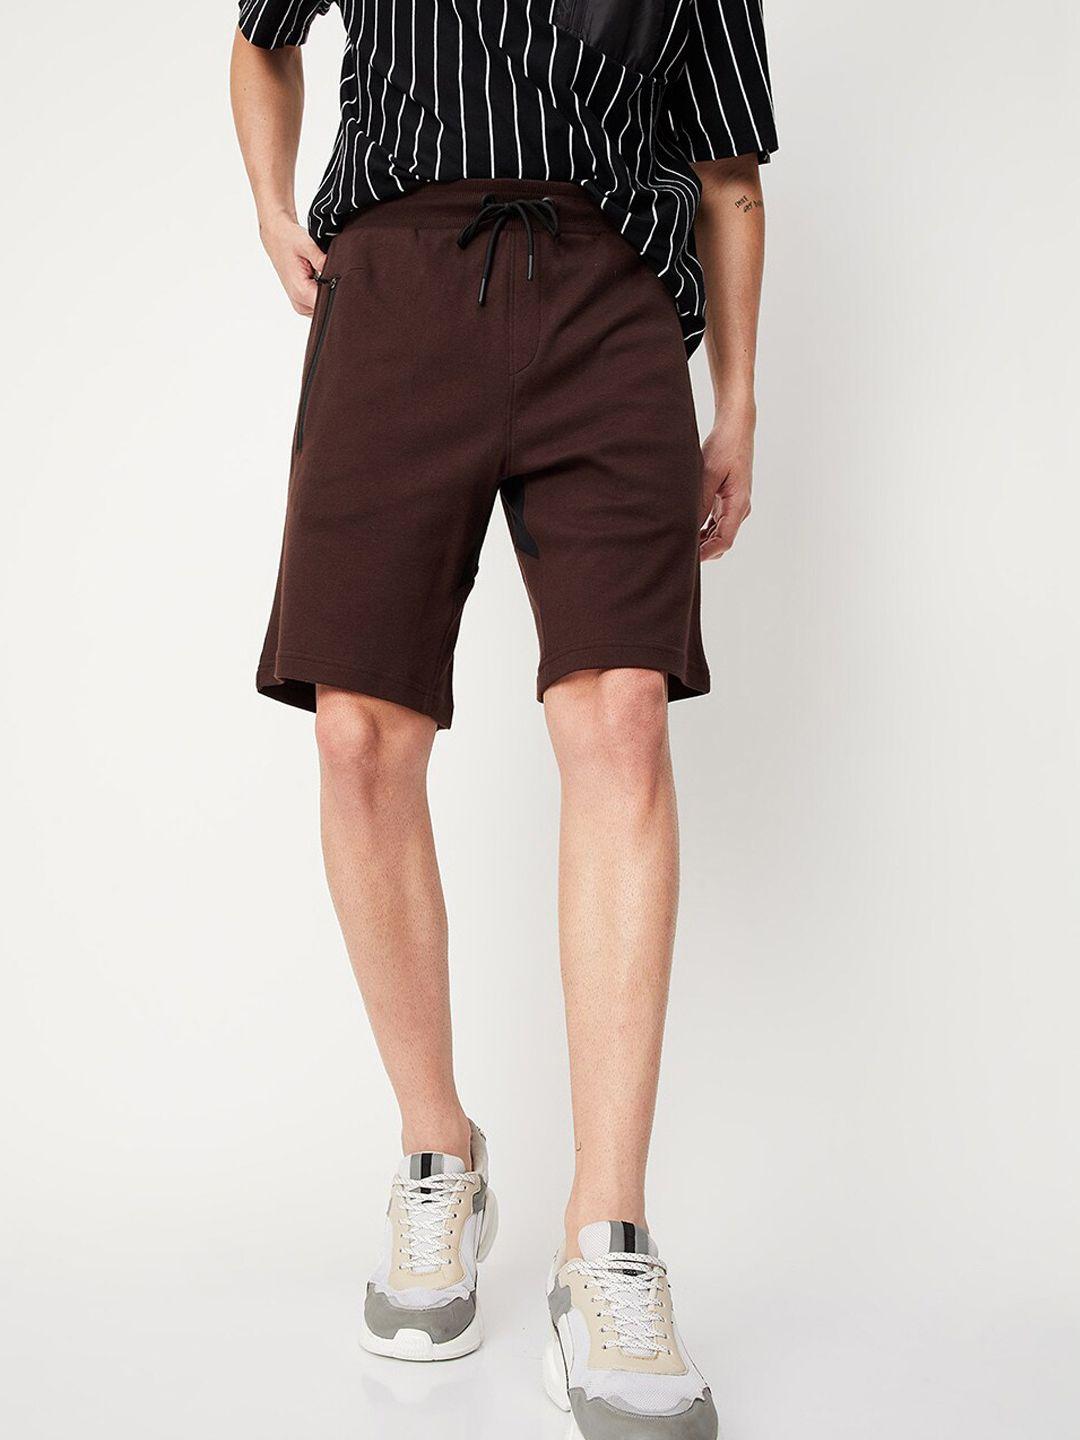 max-men-cotton-regular-fit-shorts